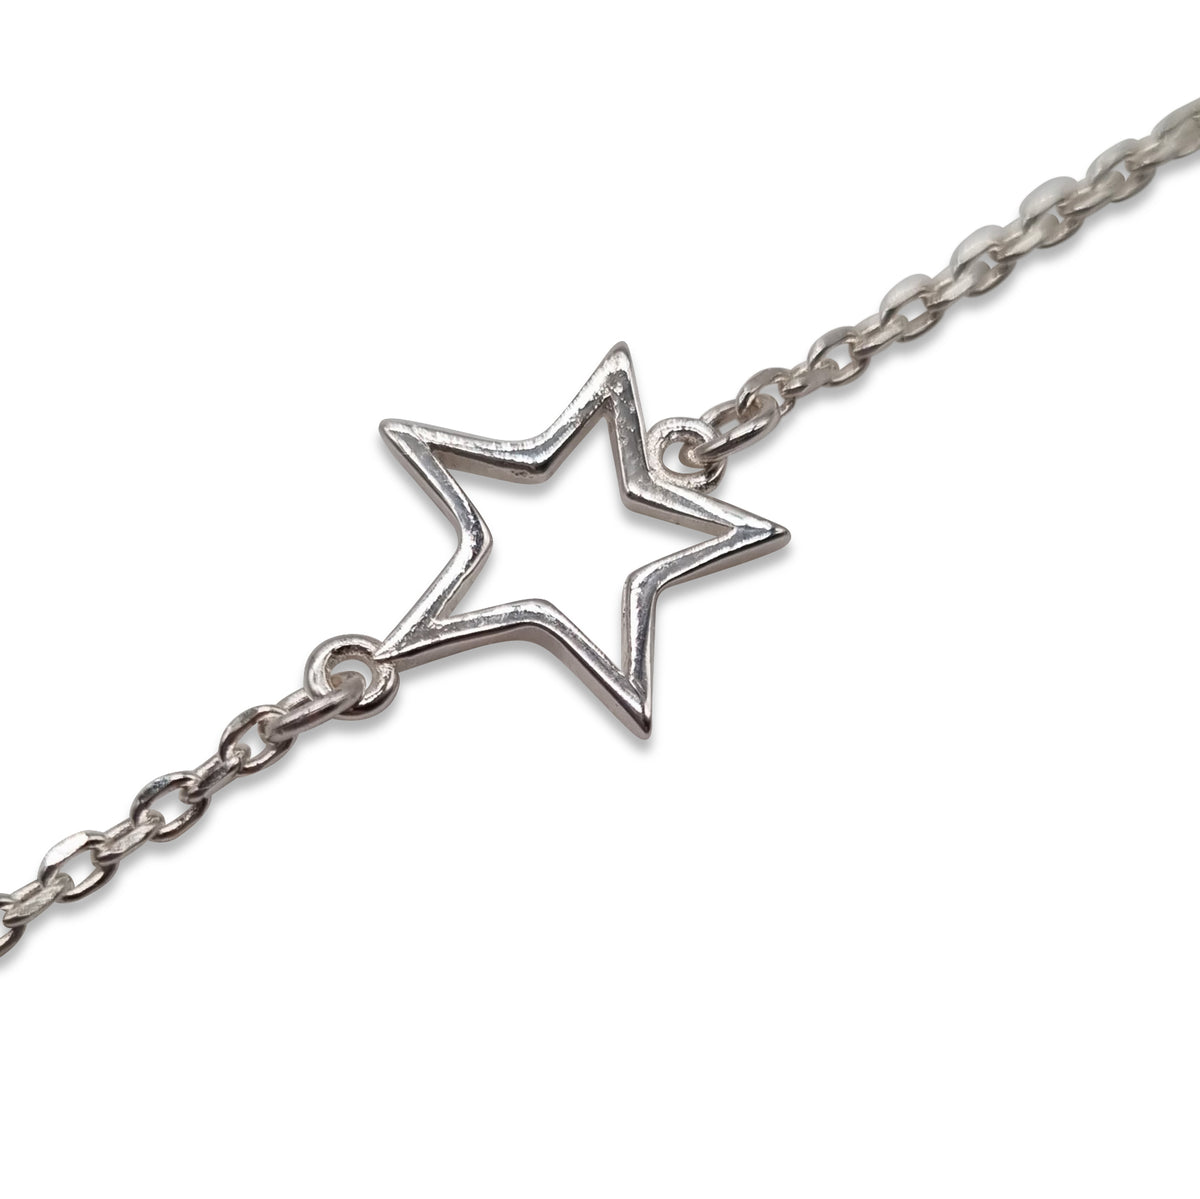 Bracelet star